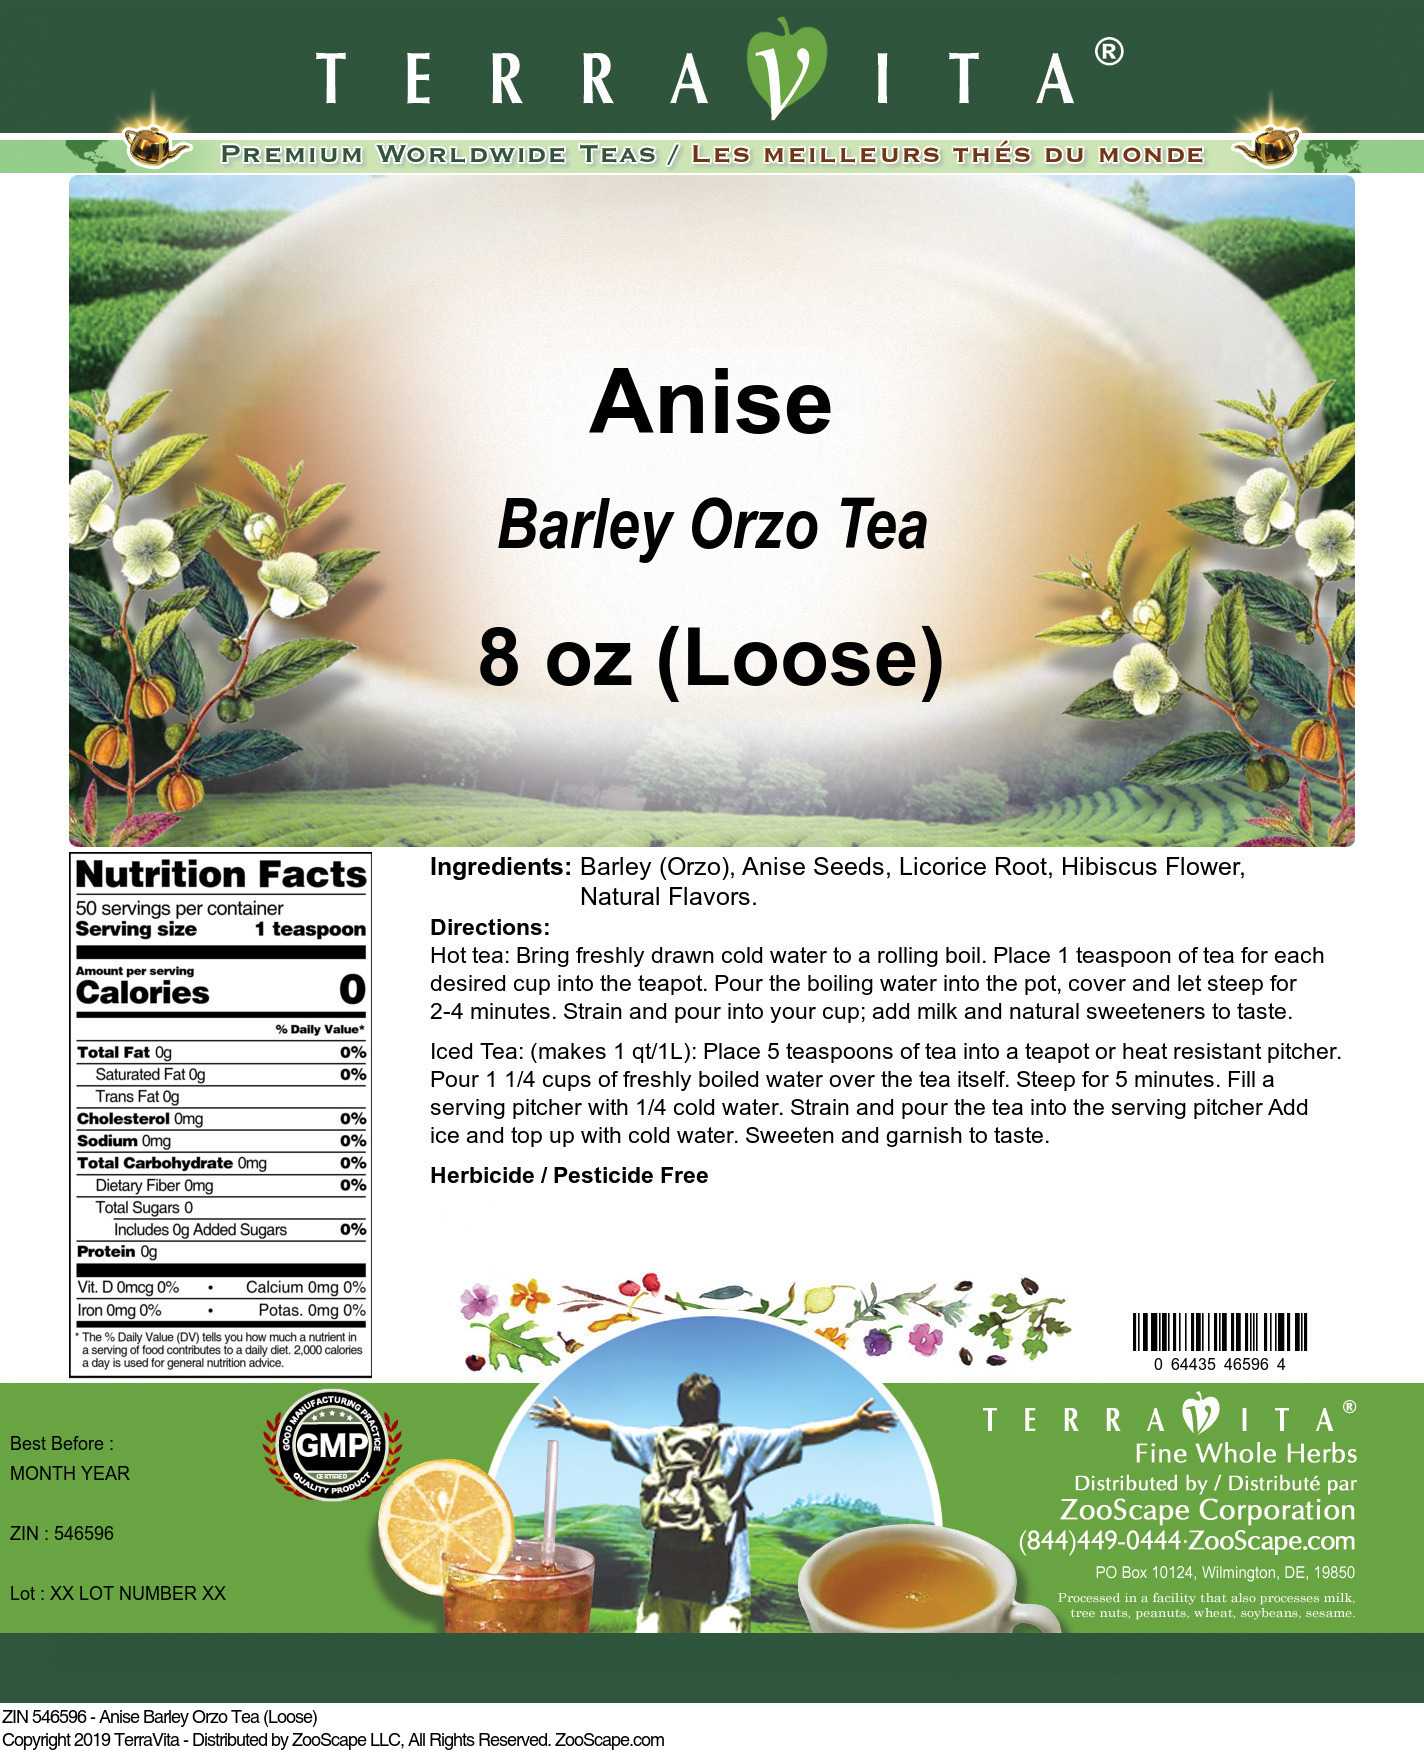 Anise Barley Orzo Tea (Loose) - Label